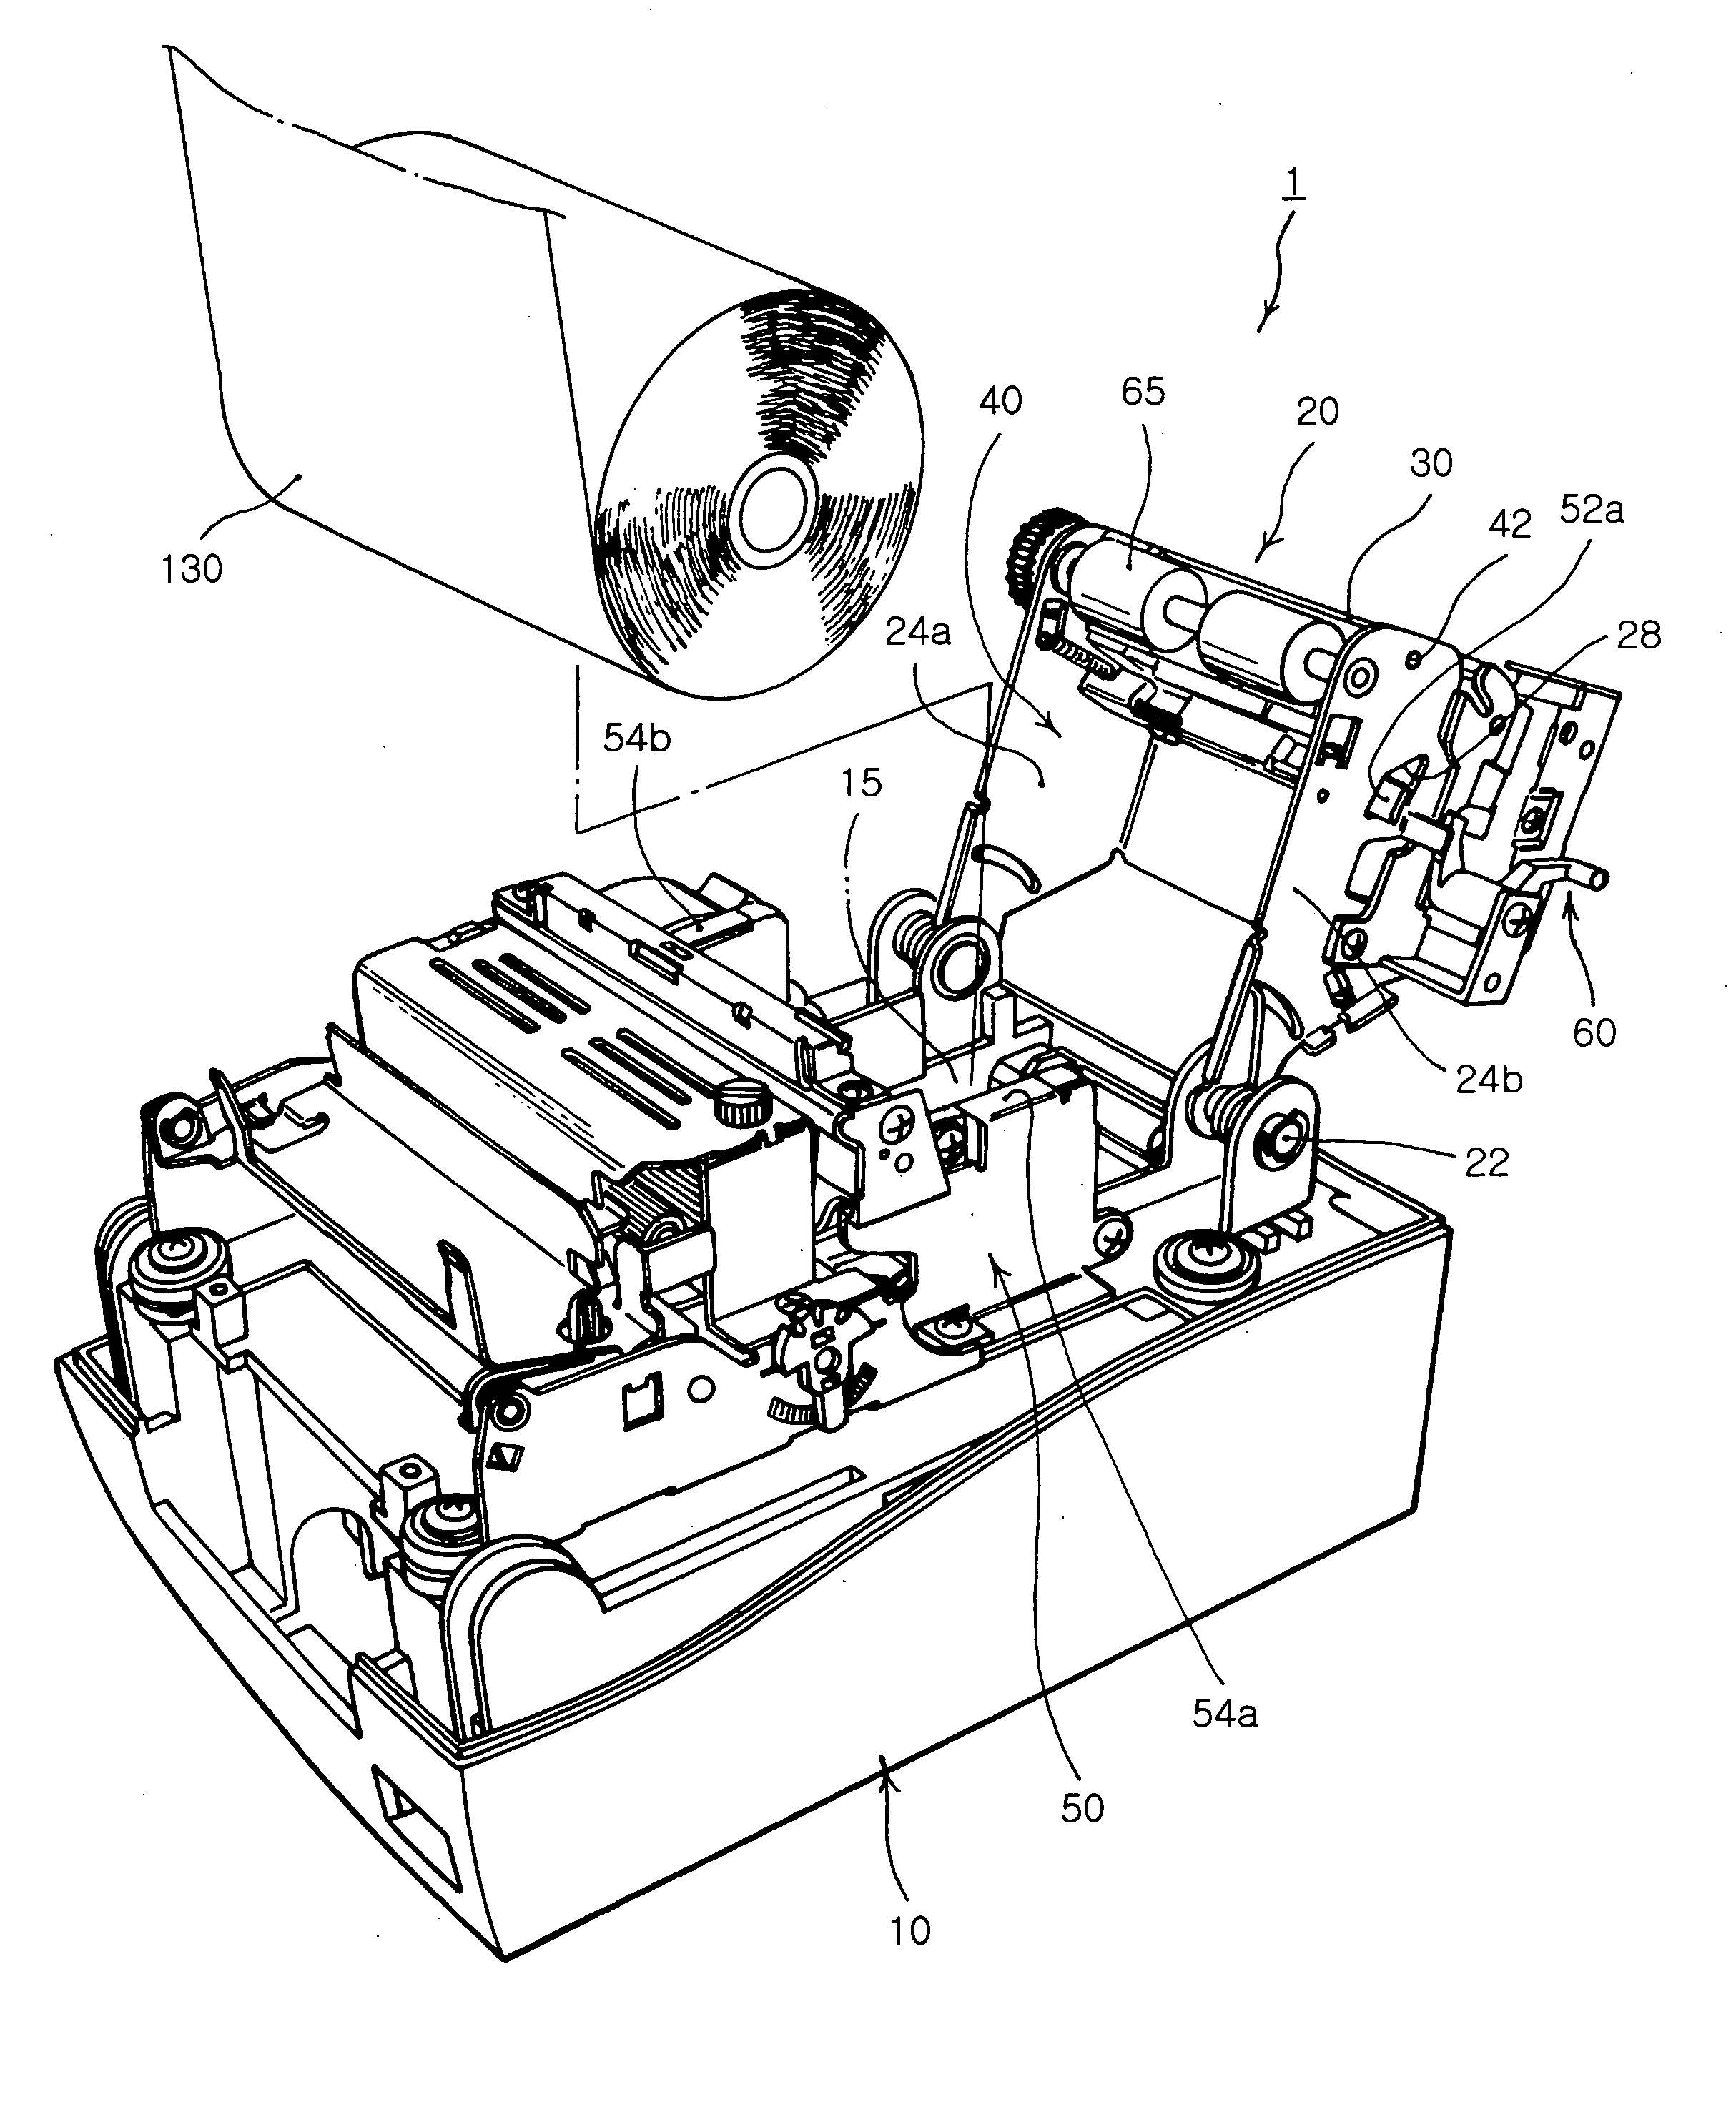 Printer with pivotable platen